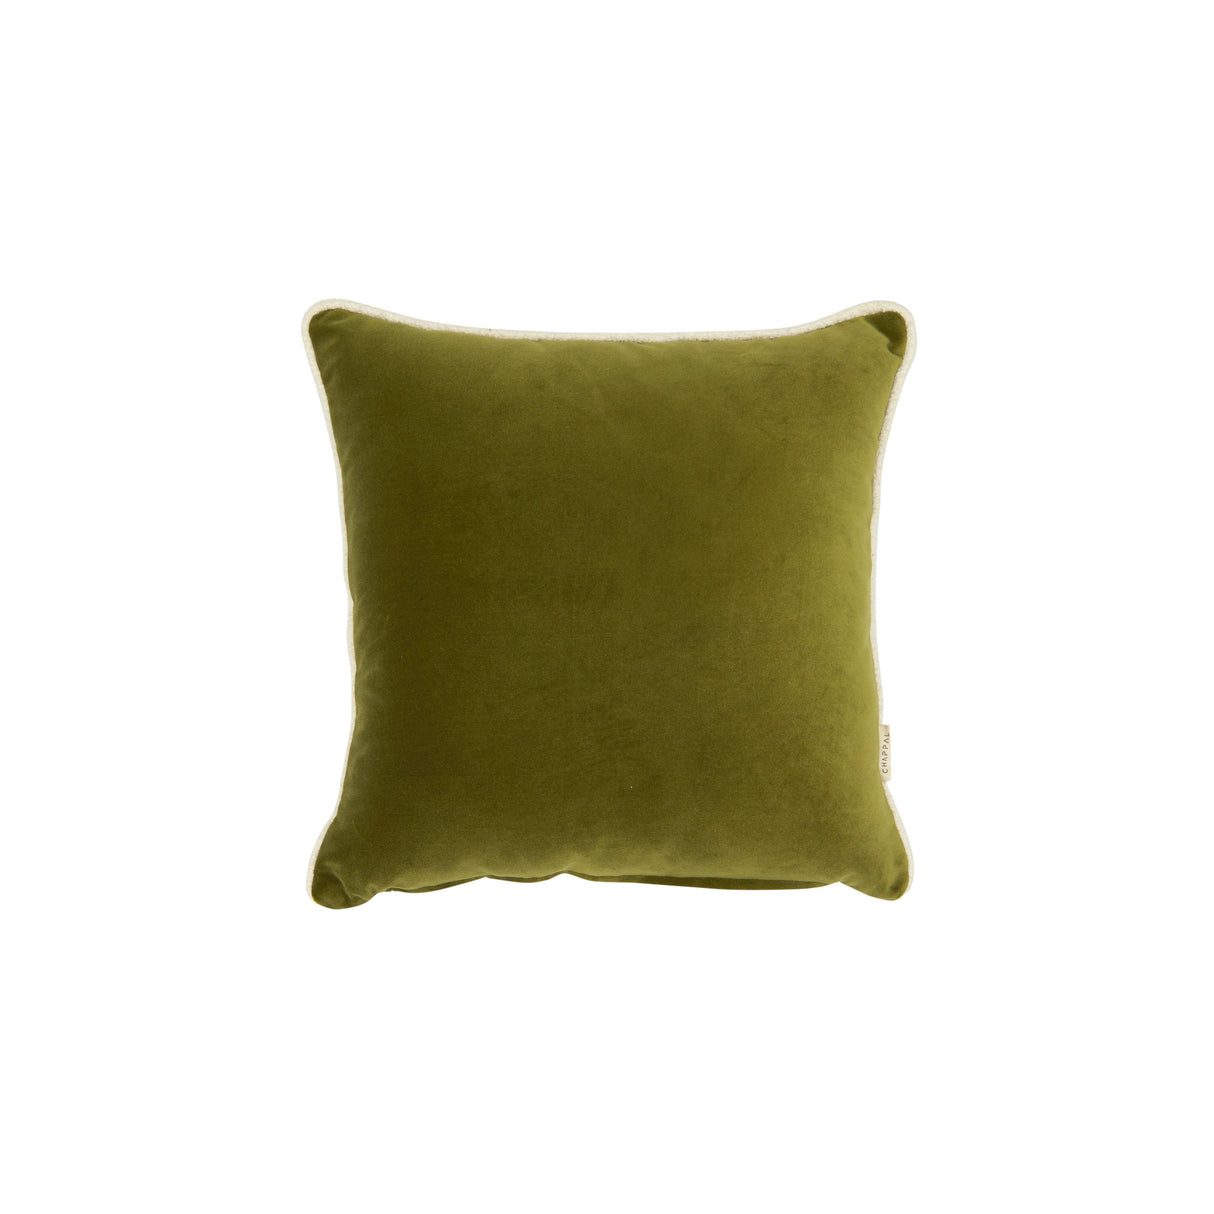 Green Velvet Throw Pillow with White Piping